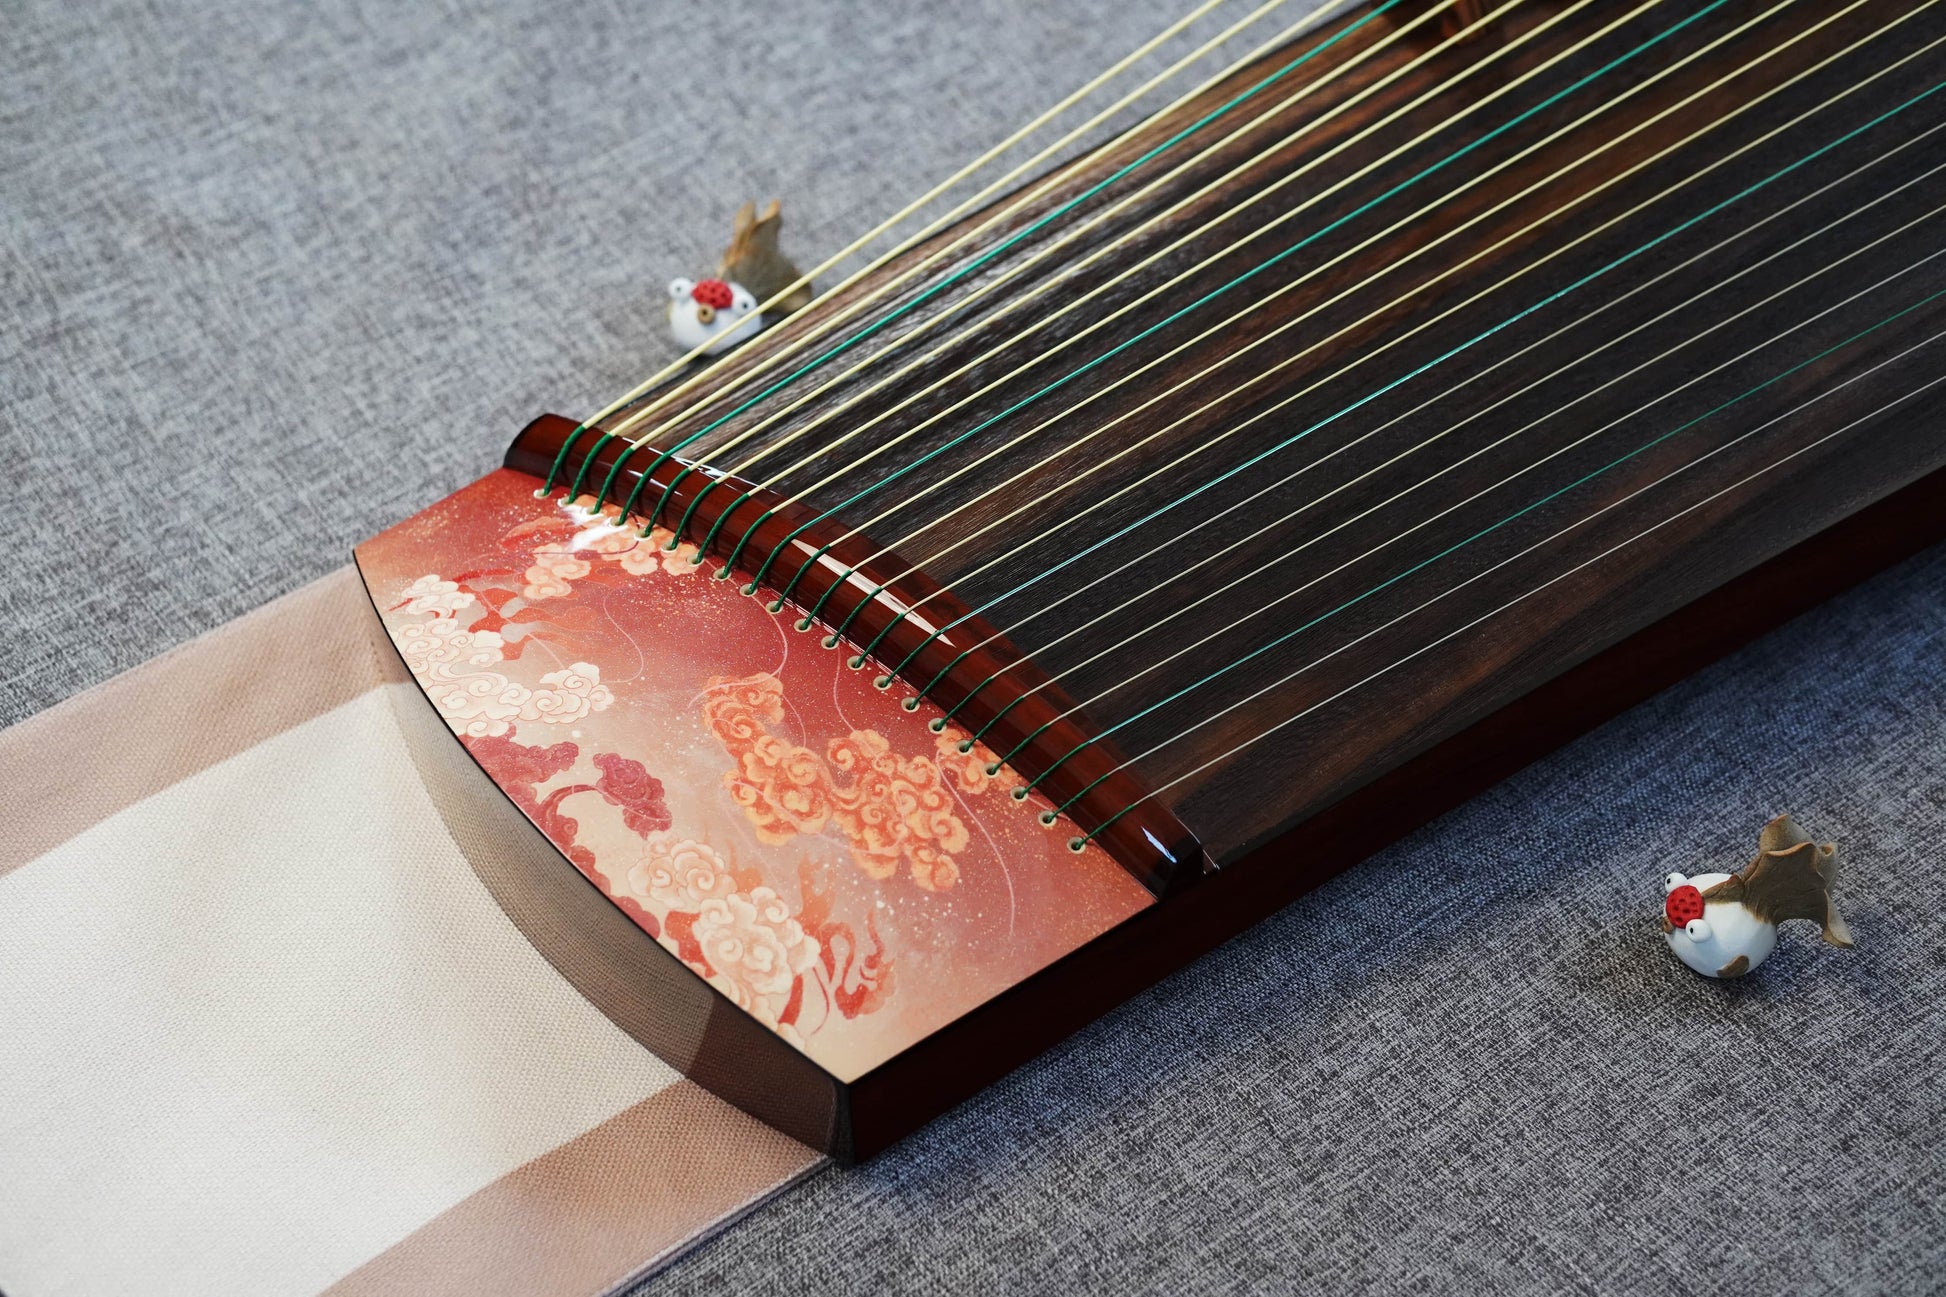 Best guzheng brands, buy guzheng, affordable guzheng, small guzheng, 100cm-135cm guzheng, Haitang guzheng, high quality guzheng, premium guzheng, 小古筝，1米古筝，1.35米古筝，便携古筝，海棠古筝，海外买古筝，高性价比古筝